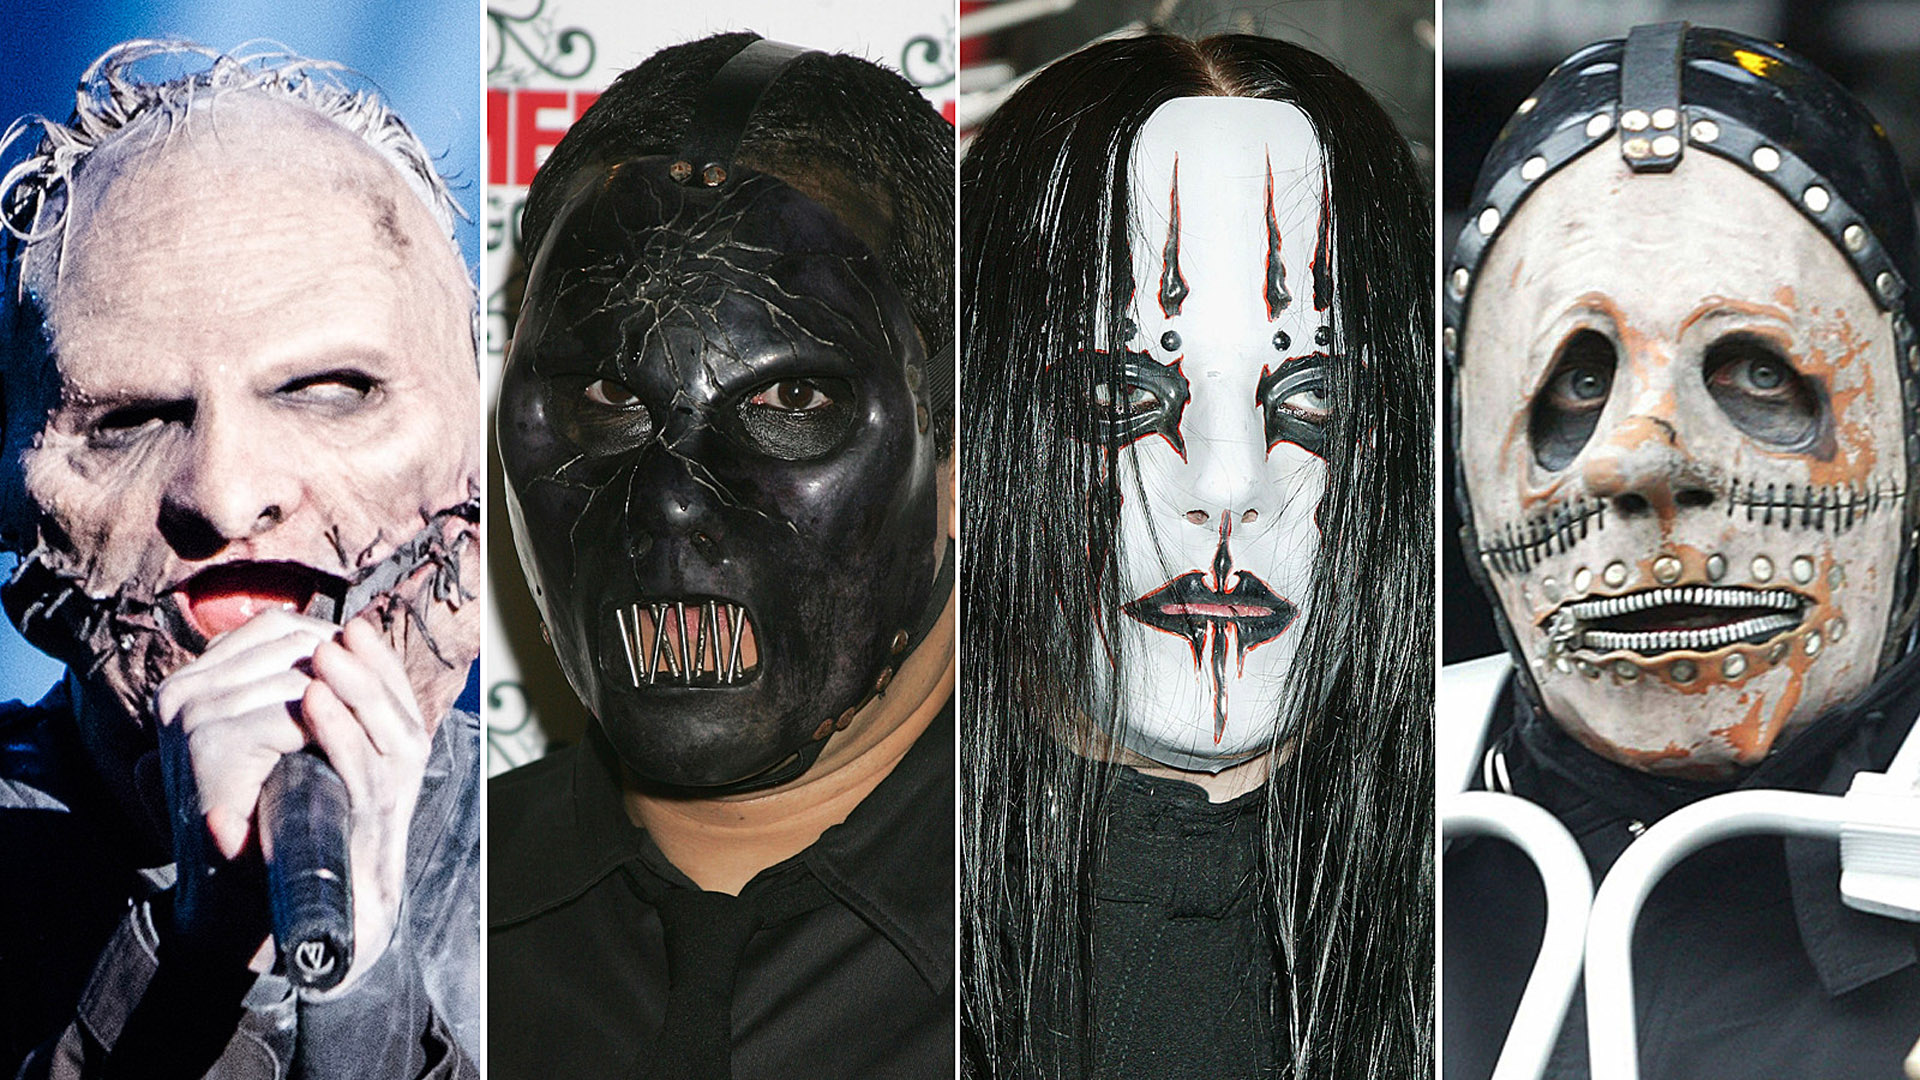 Corey Taylor Joey Jordison Paul Gray Jay Weinberg Slipknot 2K Music